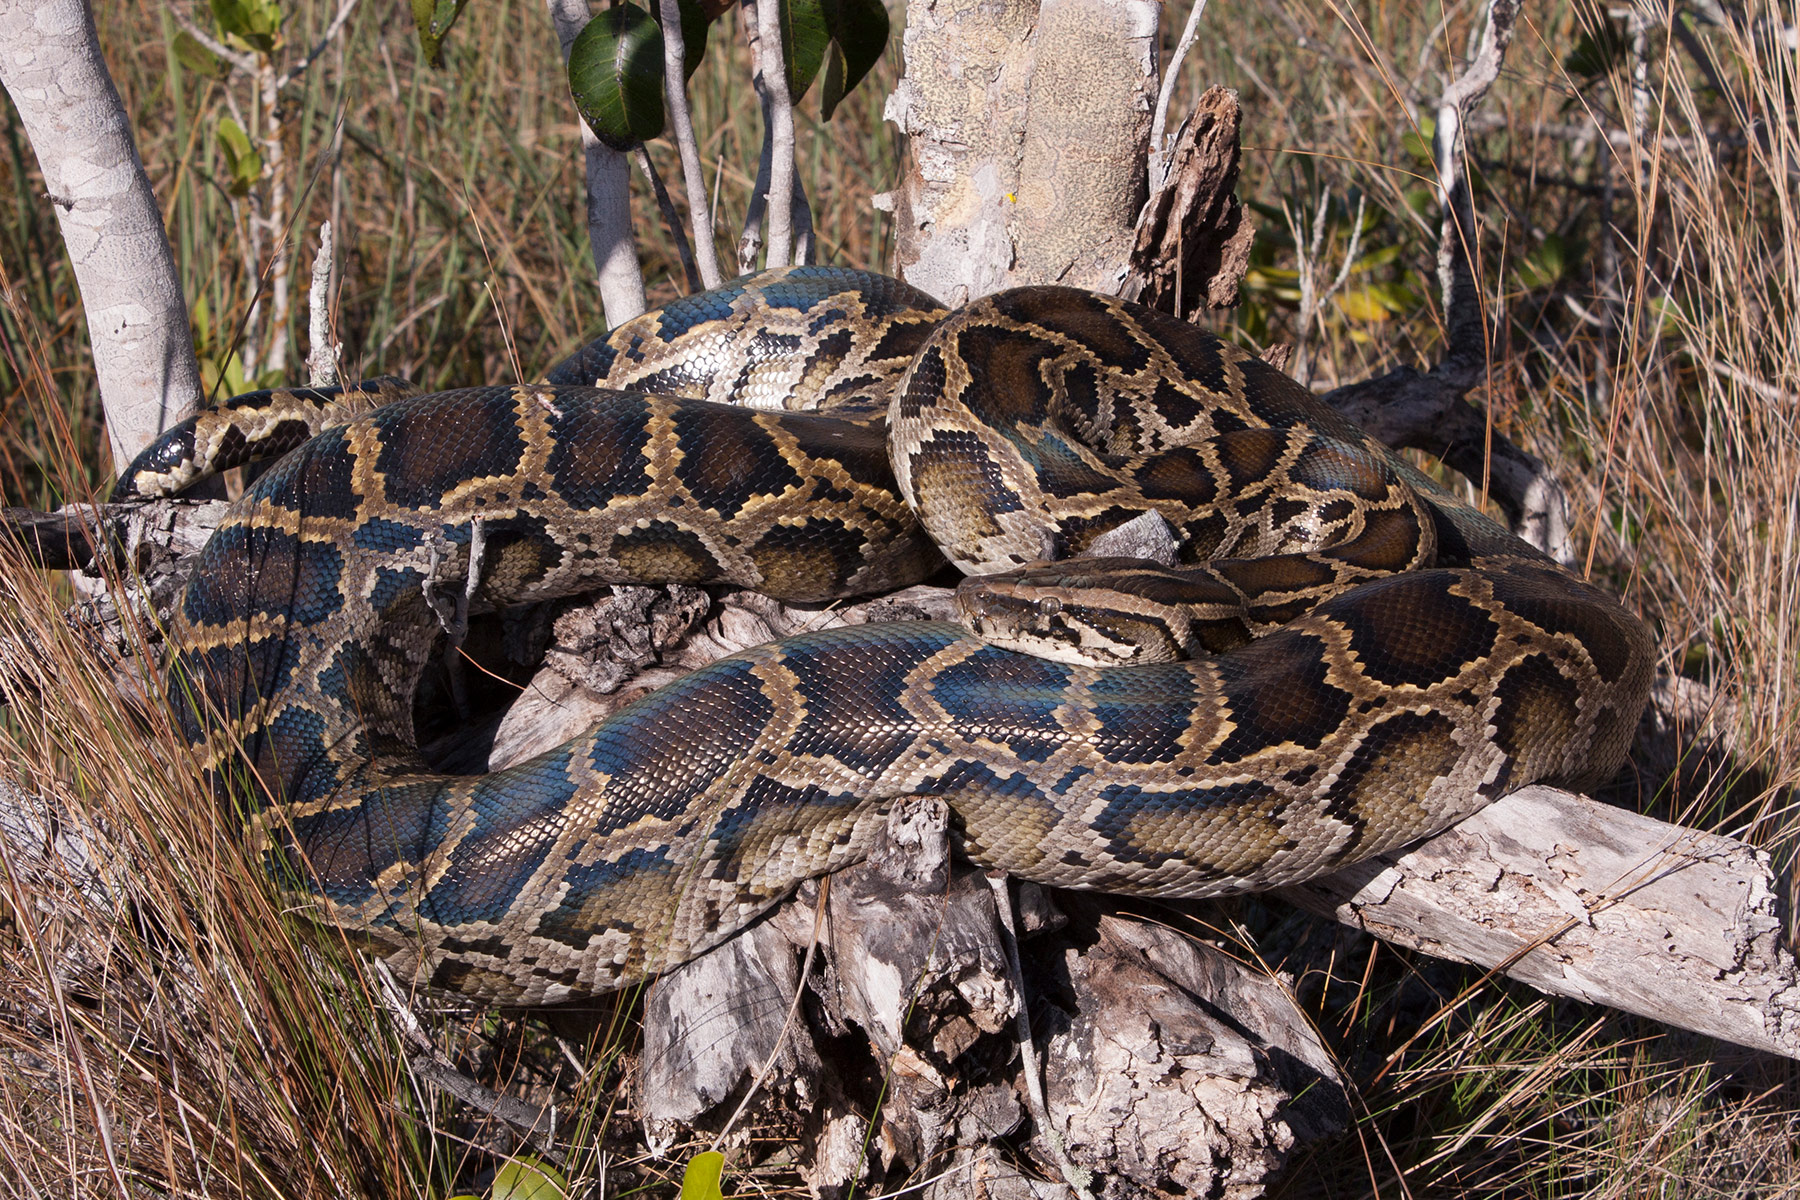 Are Florida Pythons Poisonous?